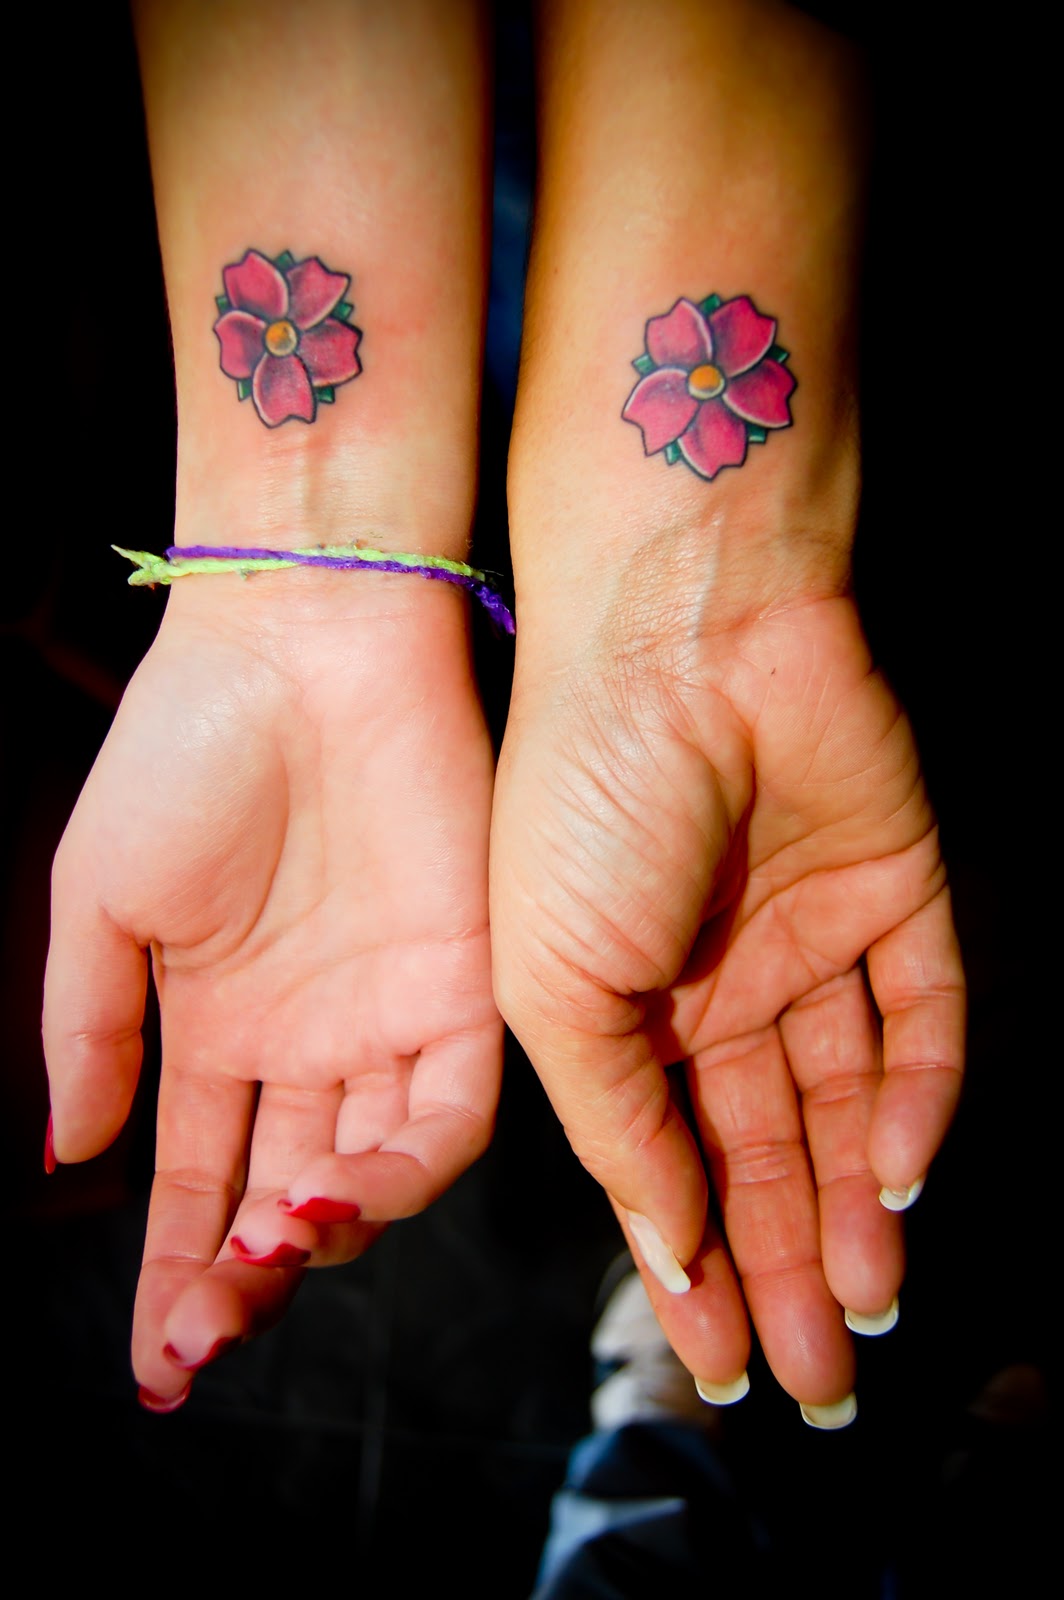 25 Tattoos That Celebrate the Unbreakable Bond Between BFFs (PHOTOS) |  CafeMom.com